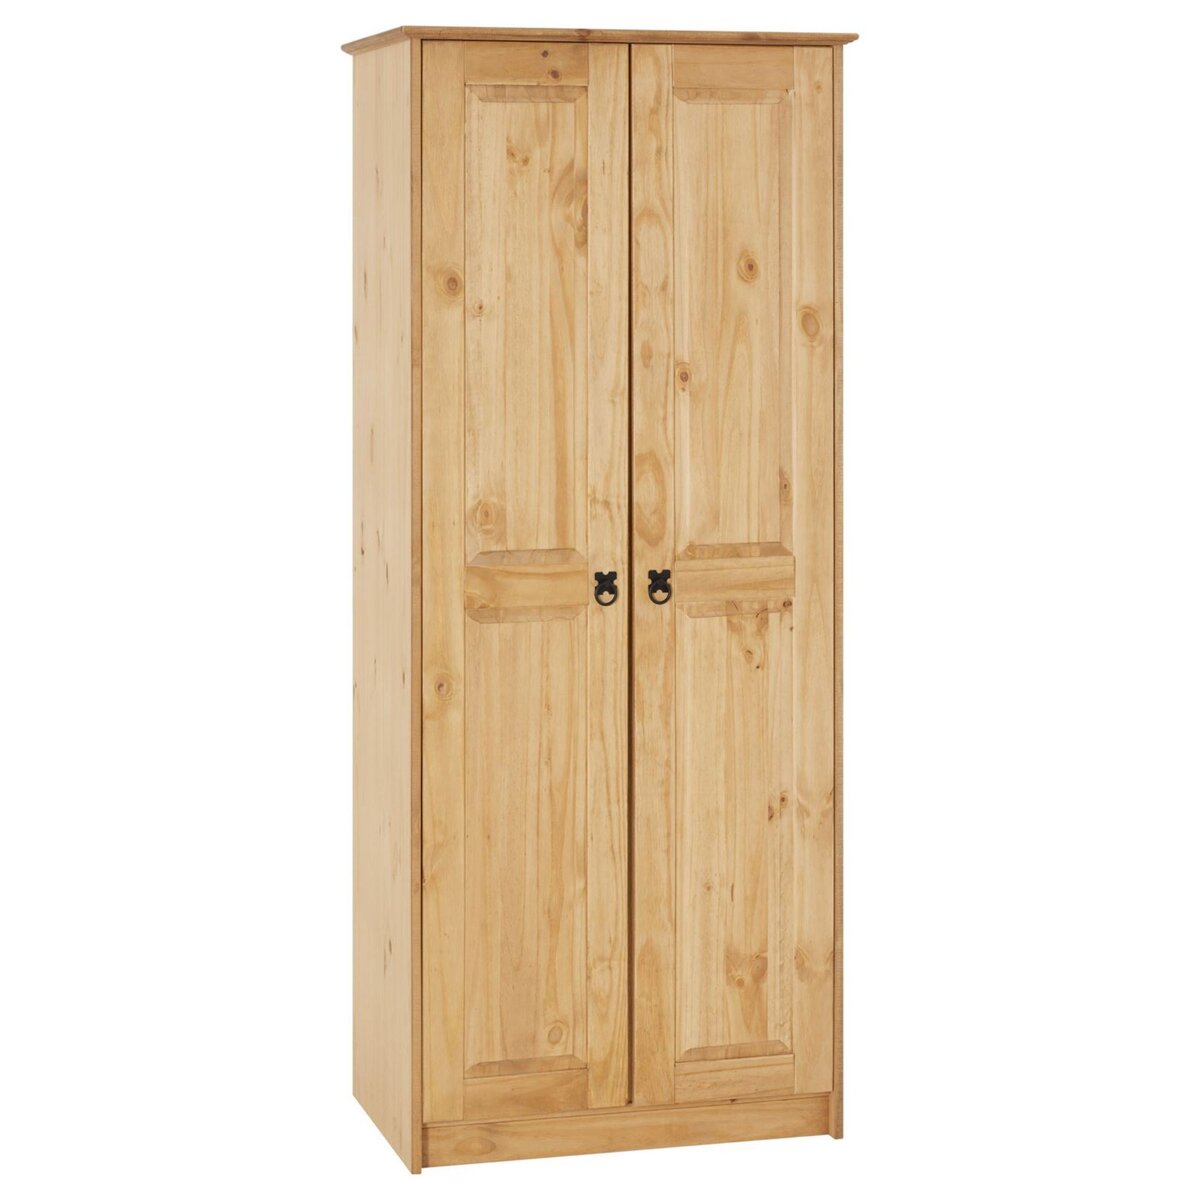 Grande armoire dressing 5 portes en bois massif rustique